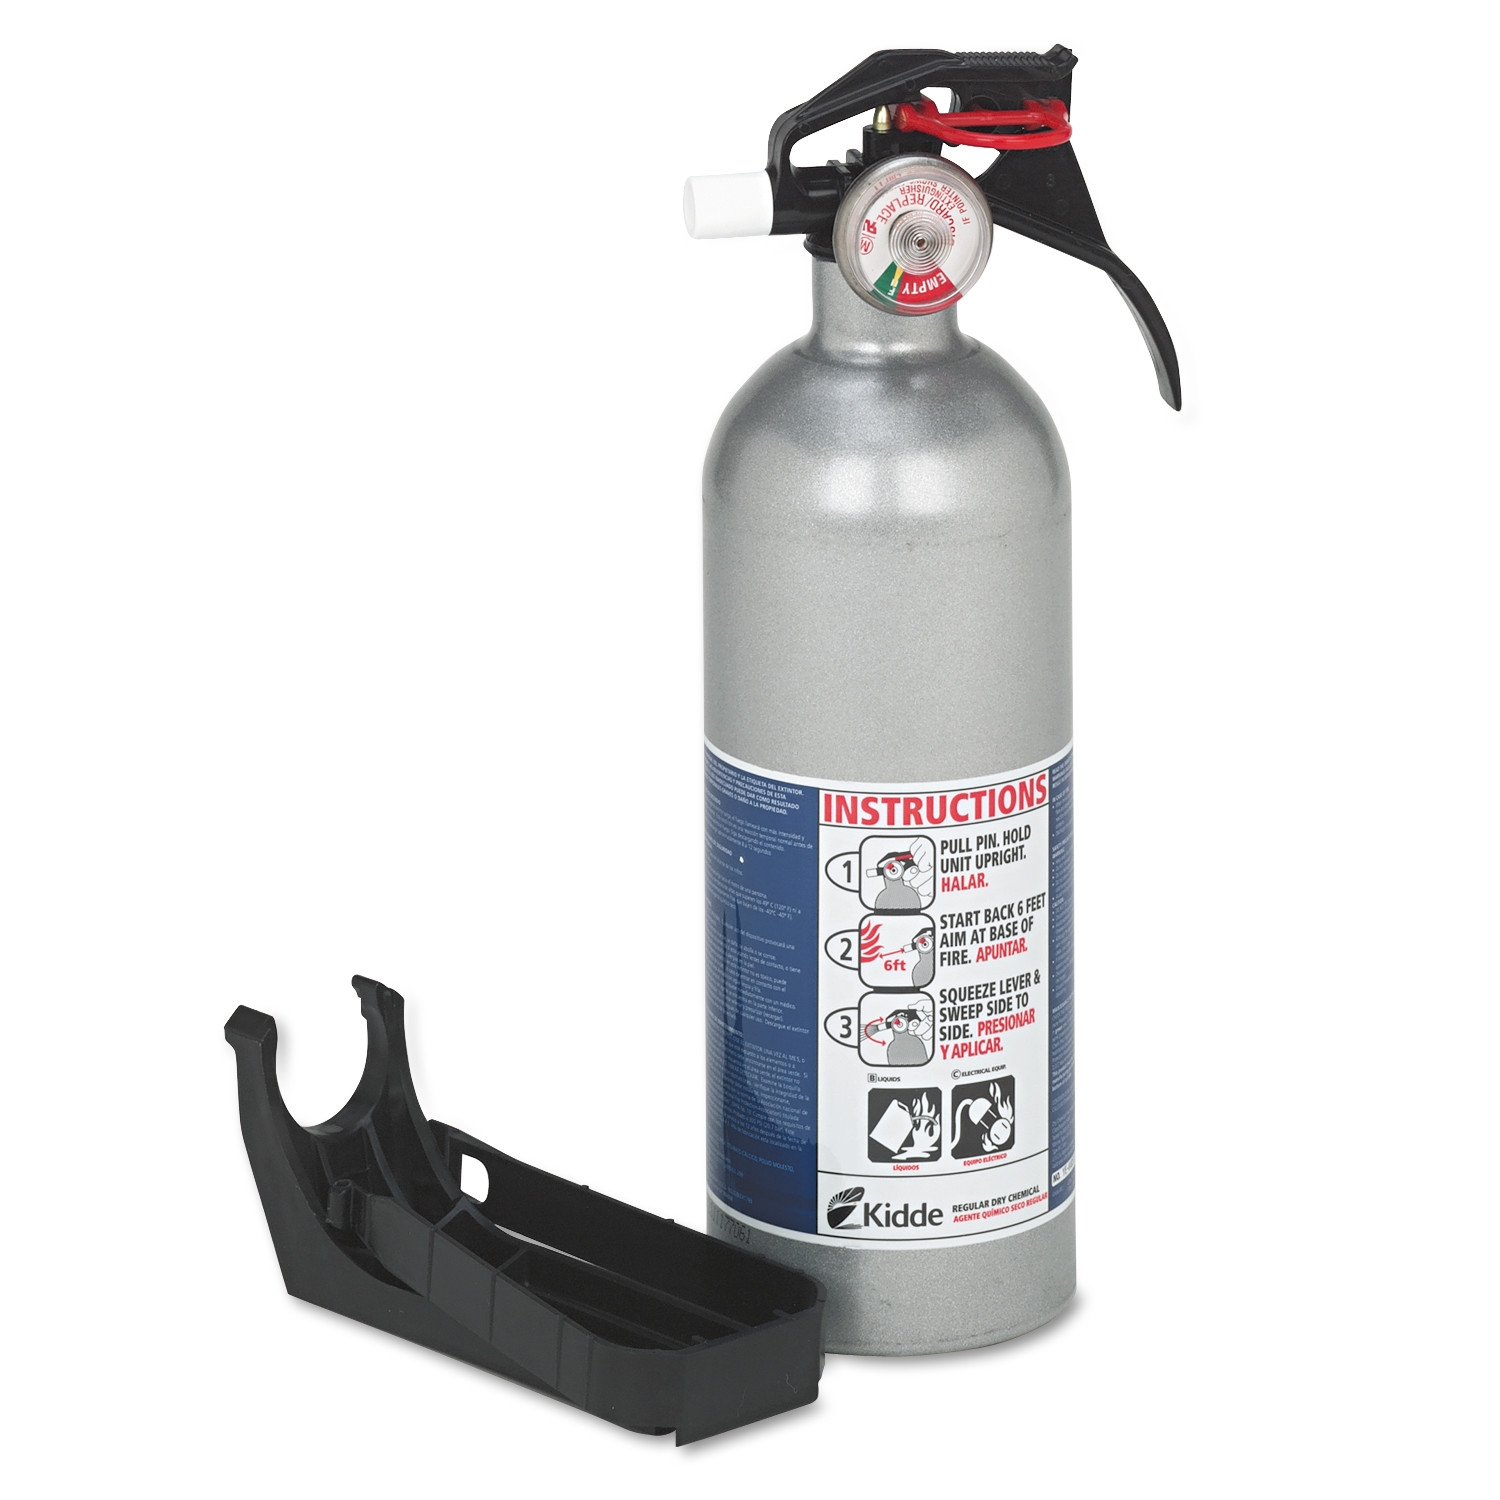 Kidde Auto Fire Extinguisher - image 5 of 5